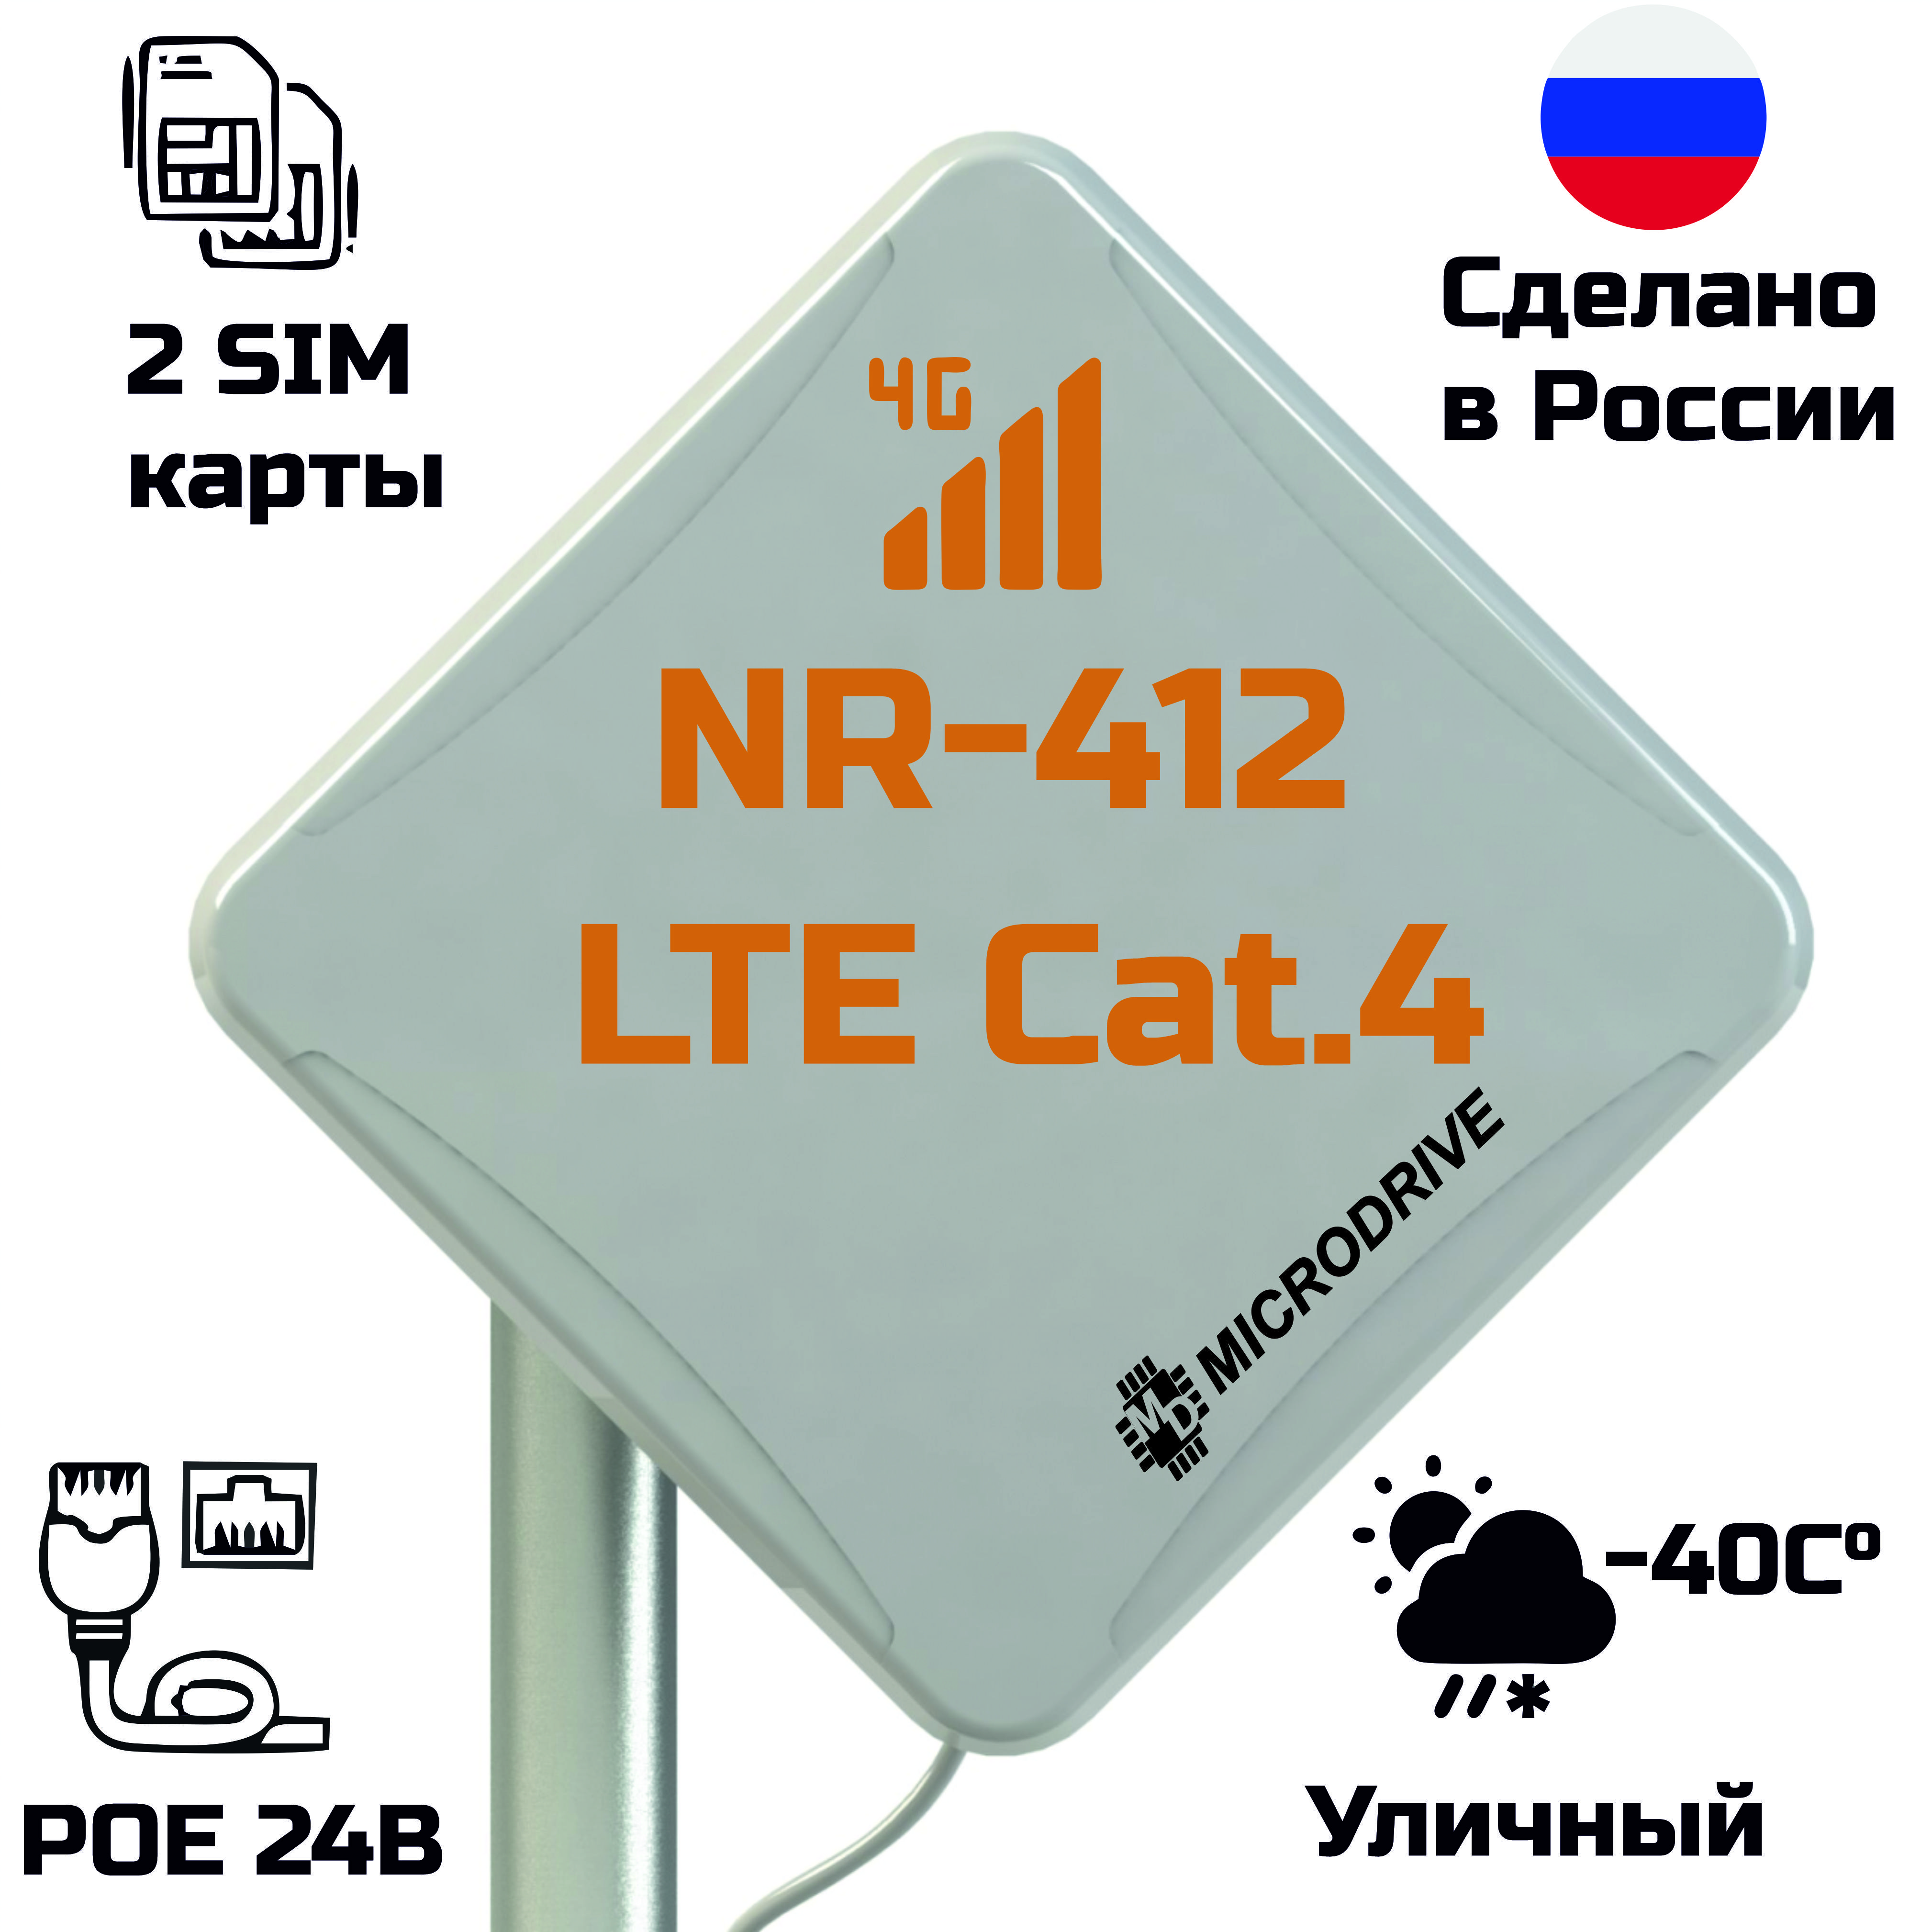 MicrodriveРоутерКомплектинтернетанадачу,2SIM,LTEантенна+15,5dbi,уличныйроутерNR-412Cat.4